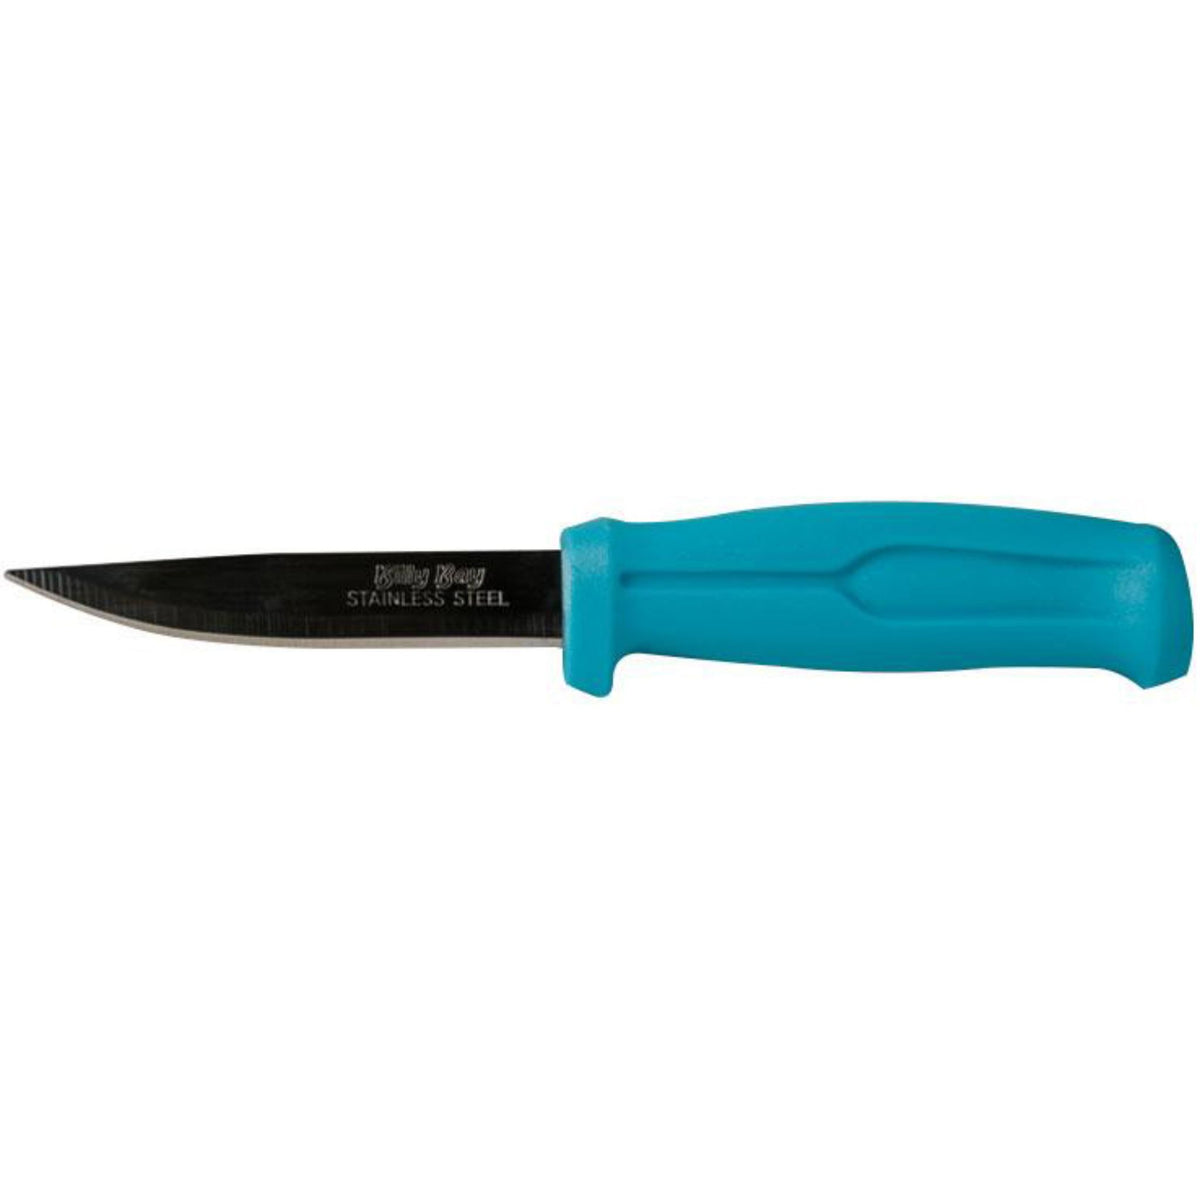 Nicklow's Wholesale Tackle > Betts > Wholesale Betts Billy Bay Halo Viz 6 Fillet  Knife PDQ Display Asst. 30 Pcs.